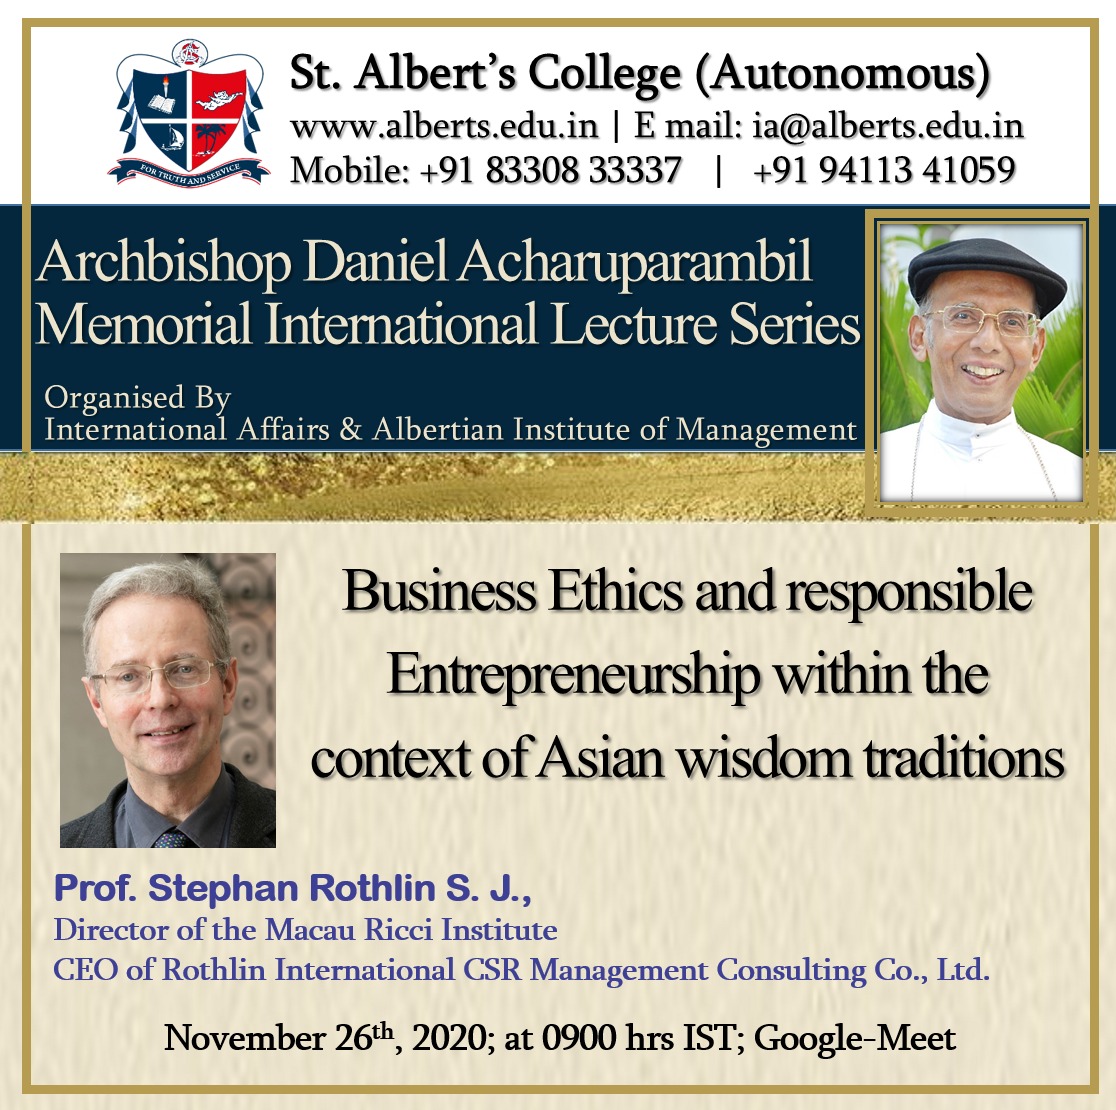 International Affairs, St. Albert’s College (Autonomous) is organizing Archbishop Daniel Acharuparambil Memorial International Lecture Series